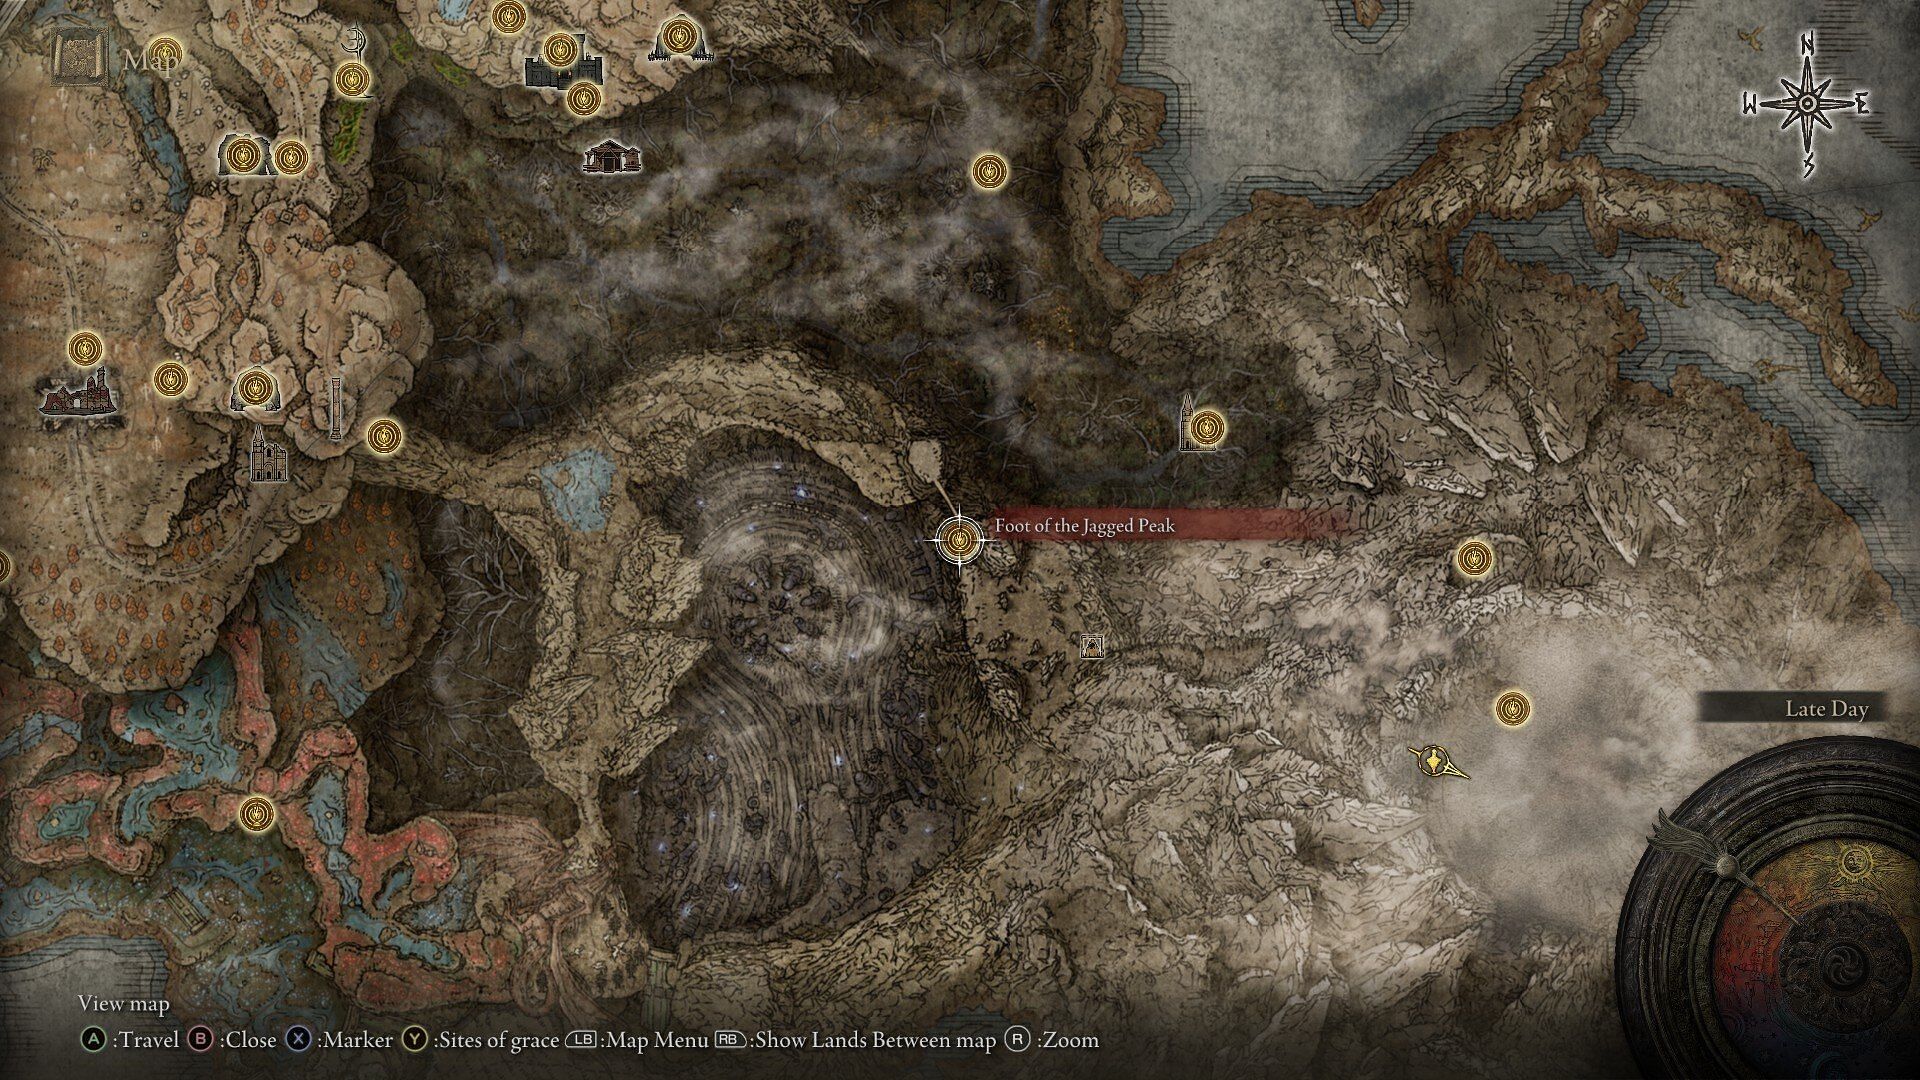 Anceint Dragon Senessax location in Elden Ring Shadow of the Erdtree (Image via FromSoftware)